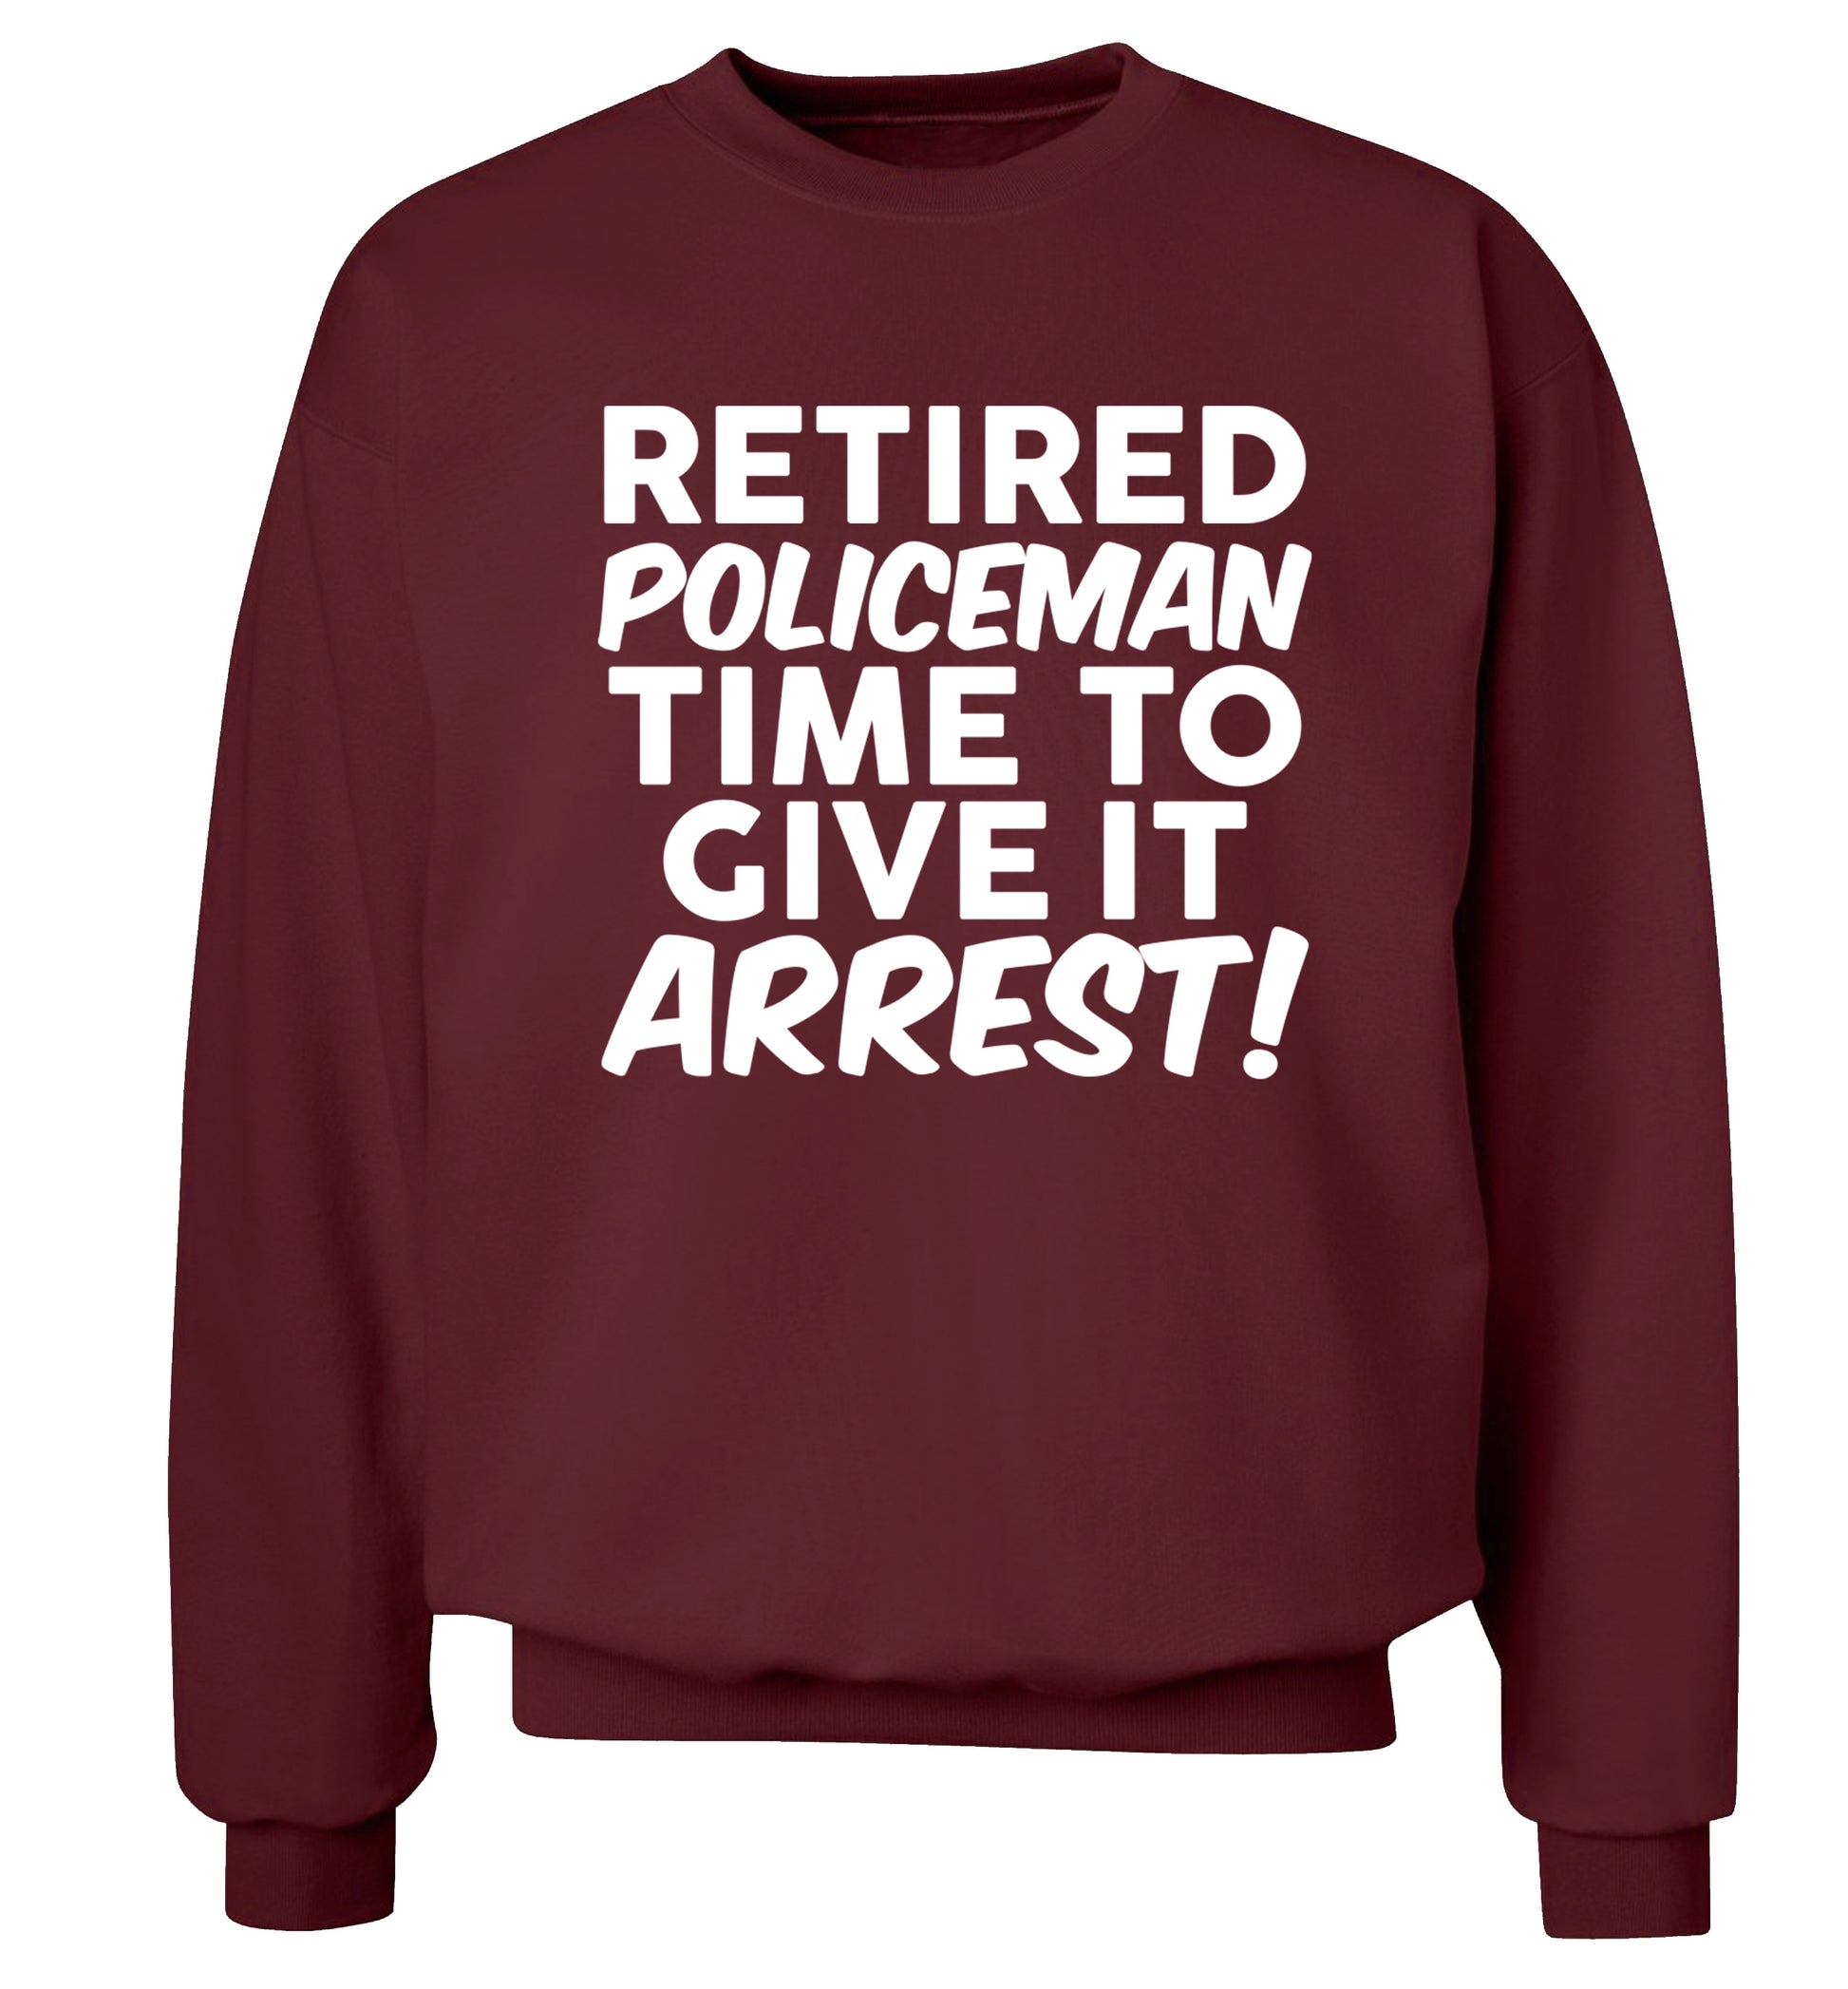 Retired policeman give it arresst! Adult's unisex maroon Sweater 2XL